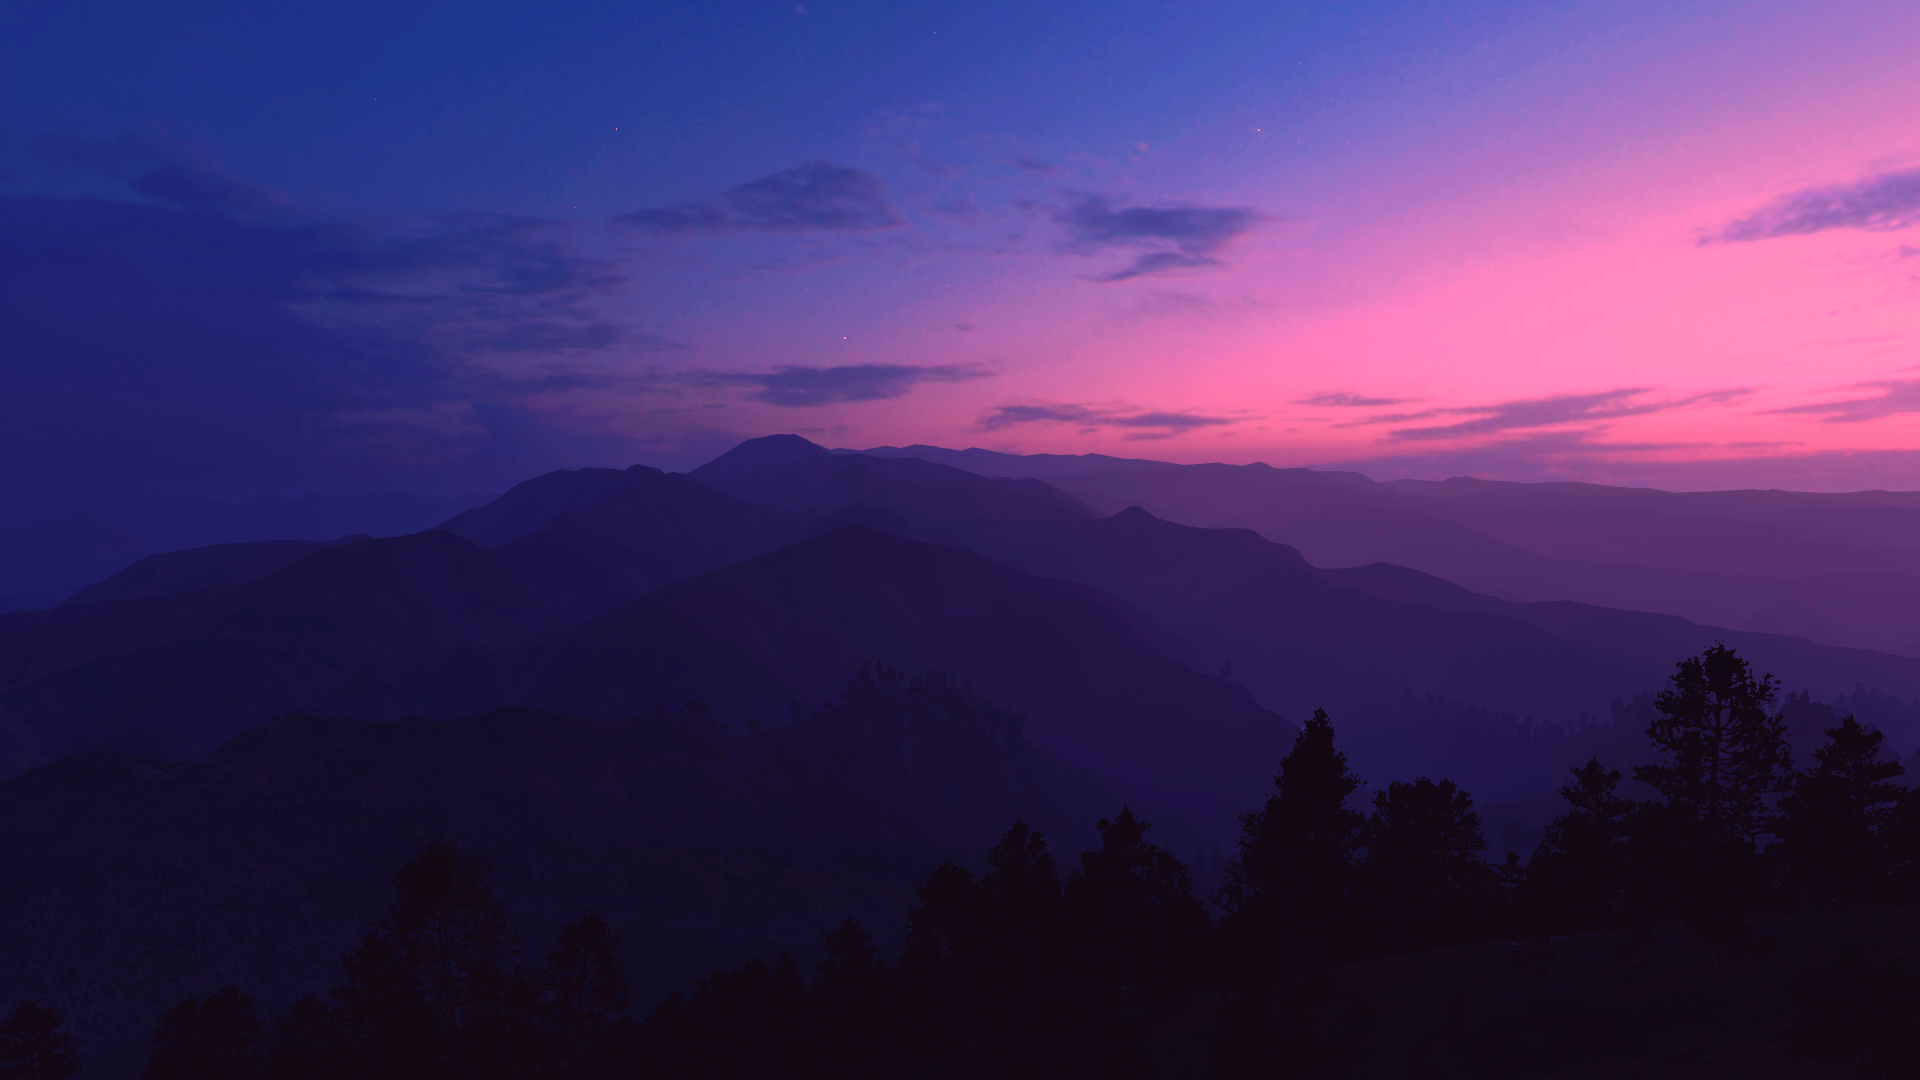 General 1920x1080 video games Forza Forza Horizon 5 landscape sky clouds hills mountains trees dark night blue purple pink Turn 10 Studios Xbox Game Studios